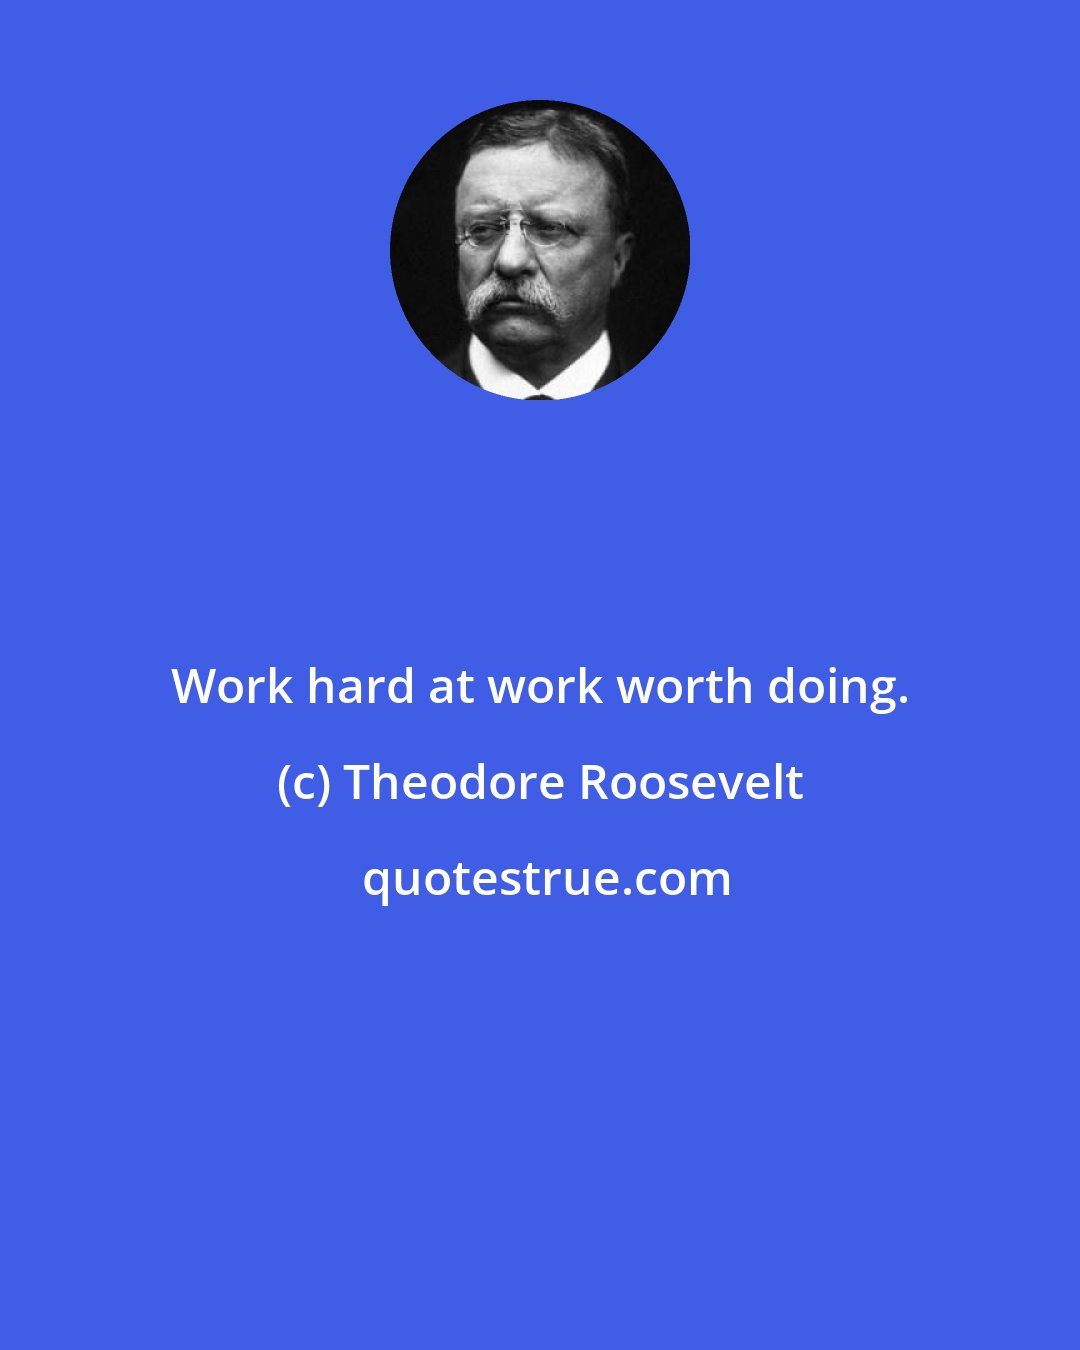 Theodore Roosevelt: Work hard at work worth doing.